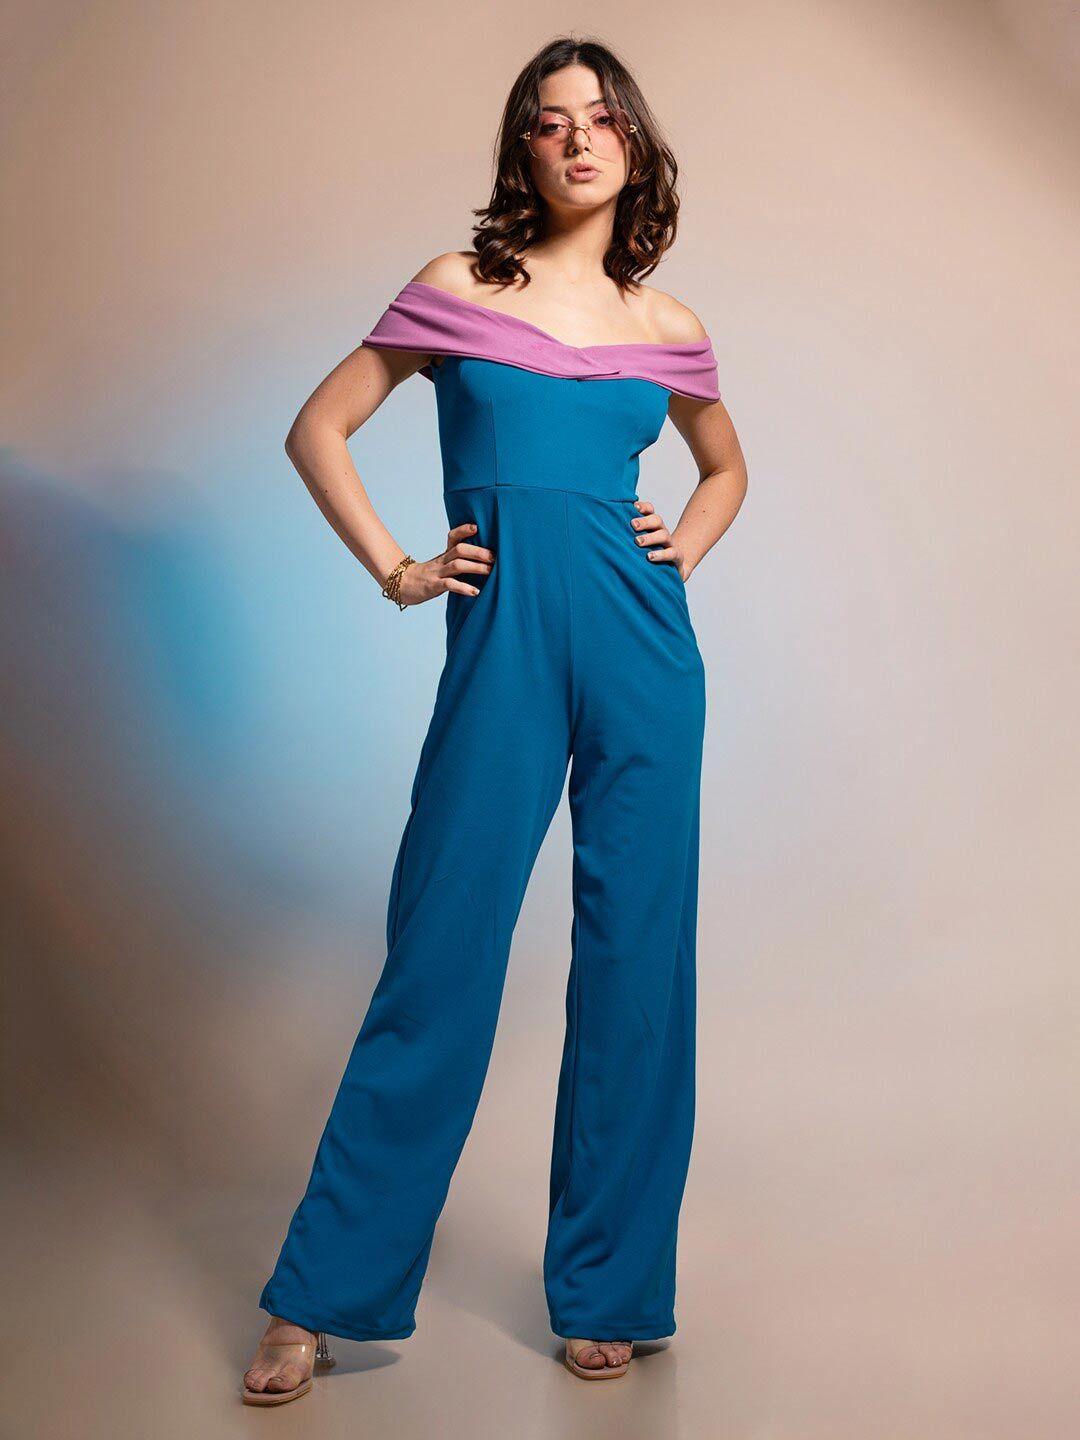 stylecast x hersheinbox blue & pink off-shoulder colourblocked basic jumpsuit